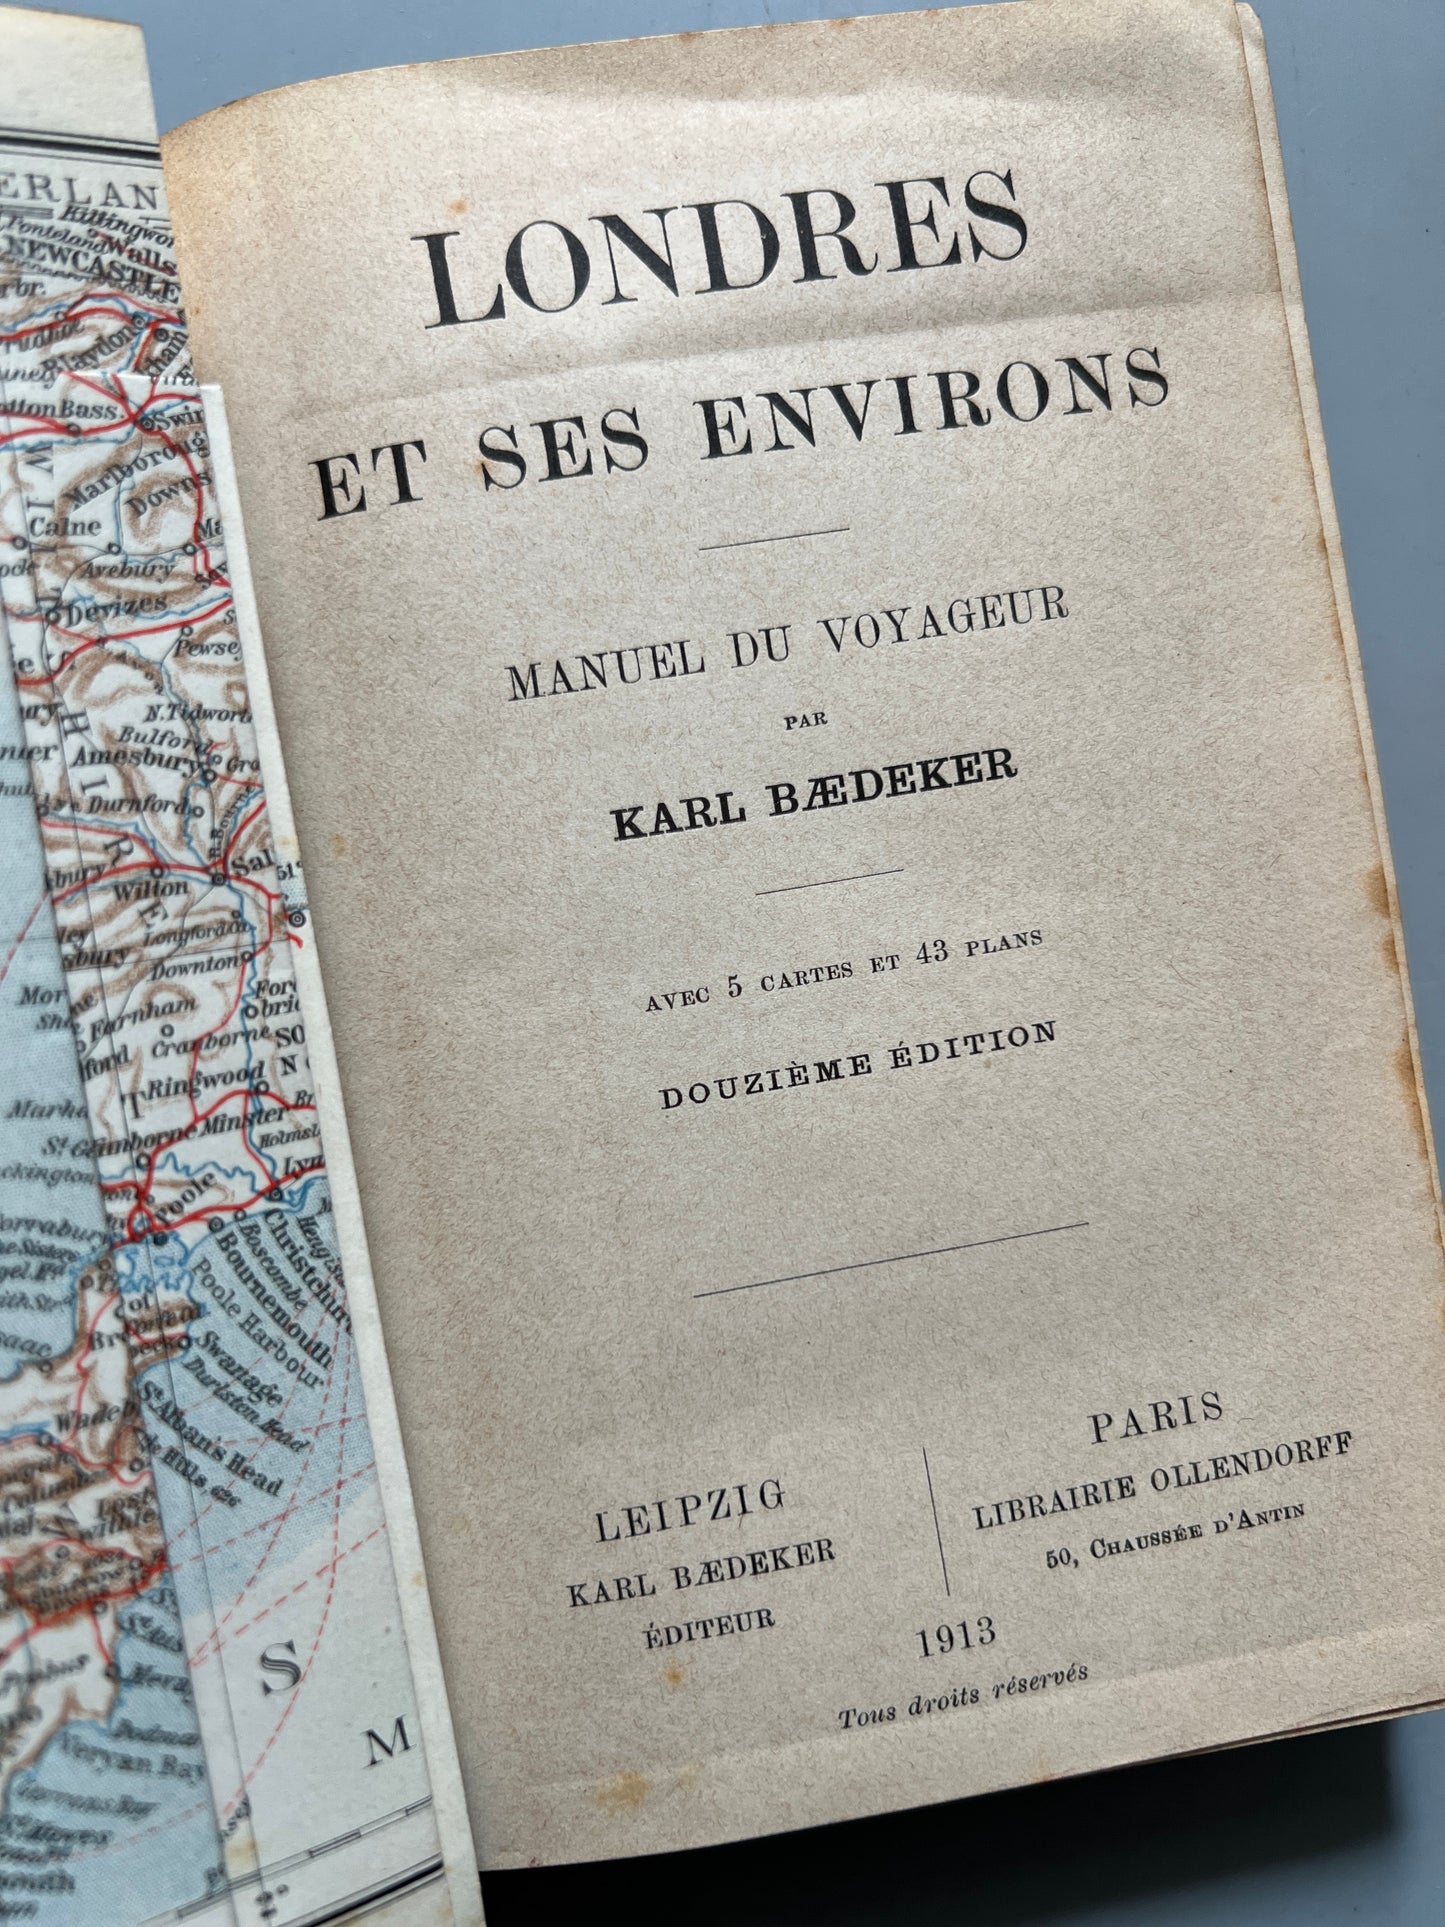 Londres et ses environs, Karl Baedeker - Karl Baedeker Éditeur, 1913